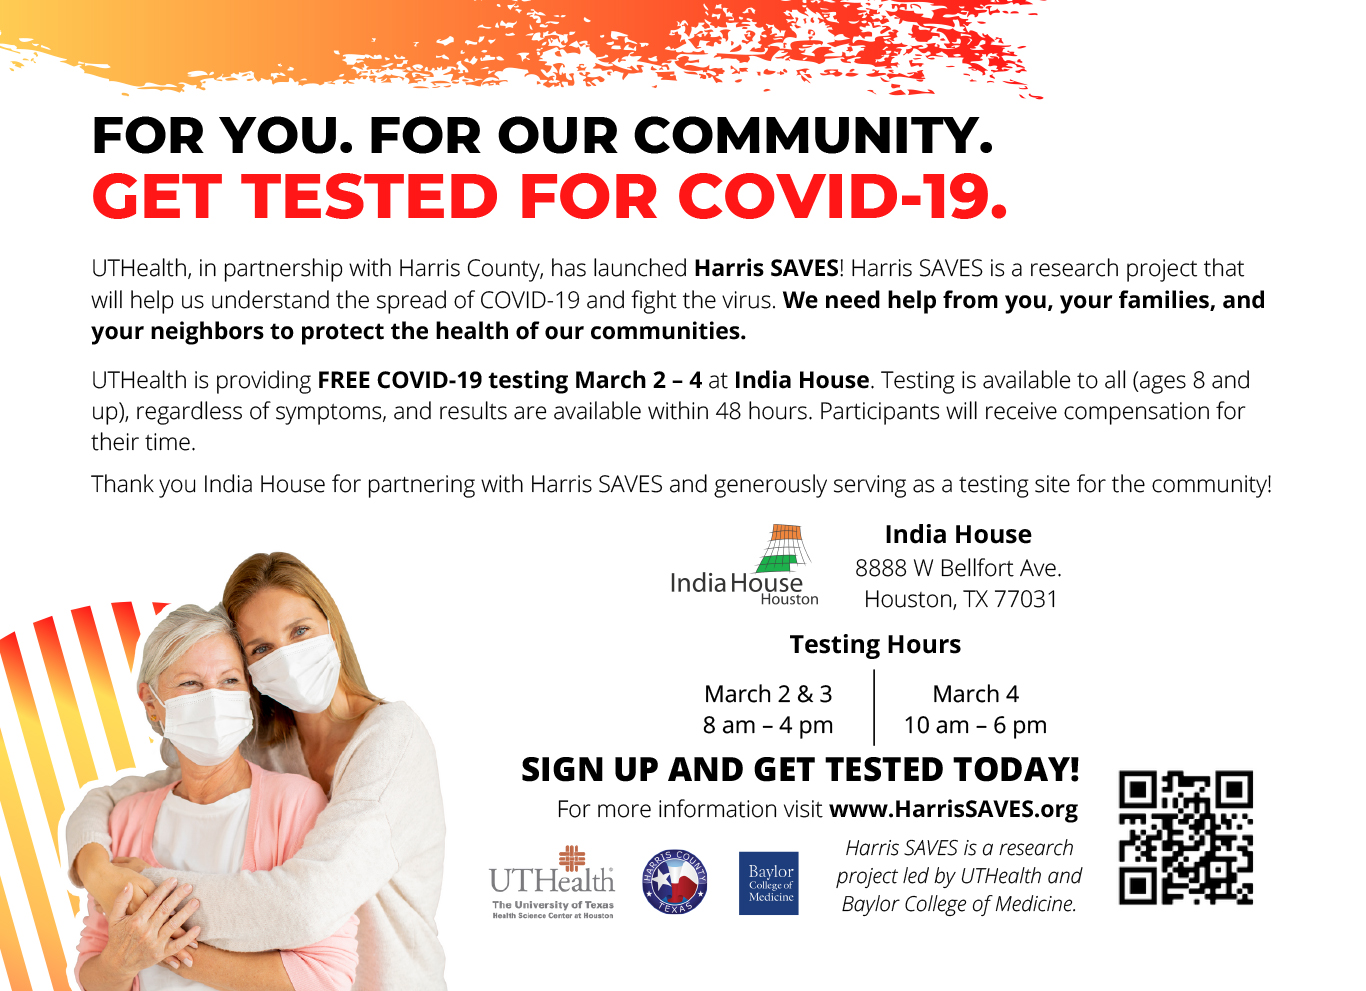 Free Covid19 testing at India House